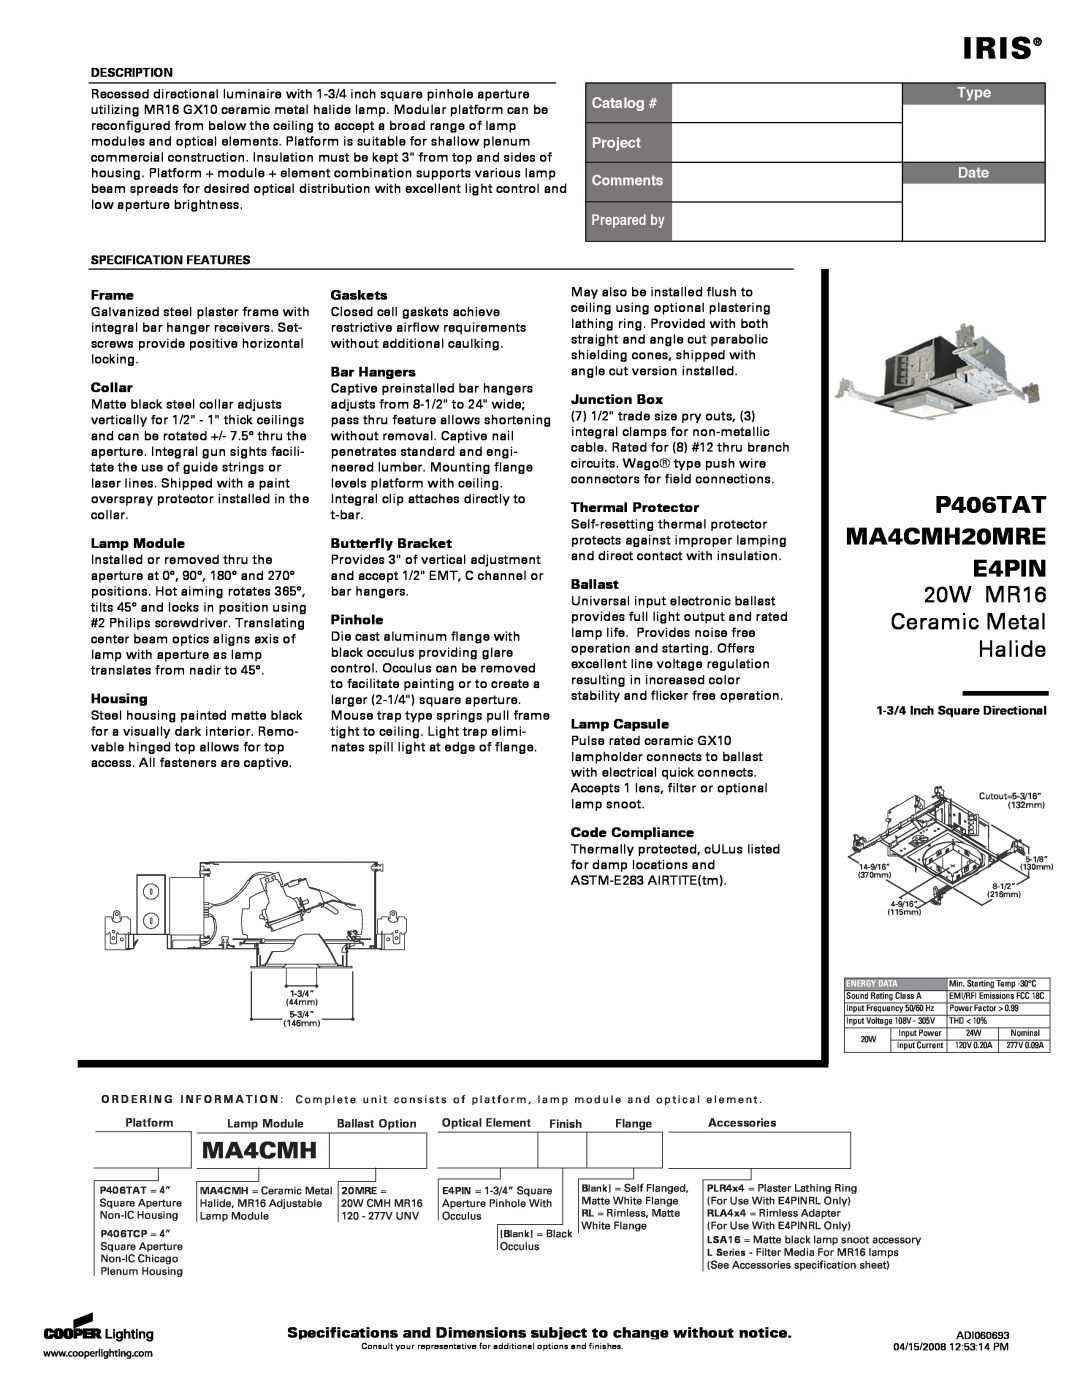 Cooper Lighting specifications Iris, P406TAT MA4CMH20MRE E4PIN, 20W MR16 Ceramic Metal Halide, Catalog #, Prepared by 